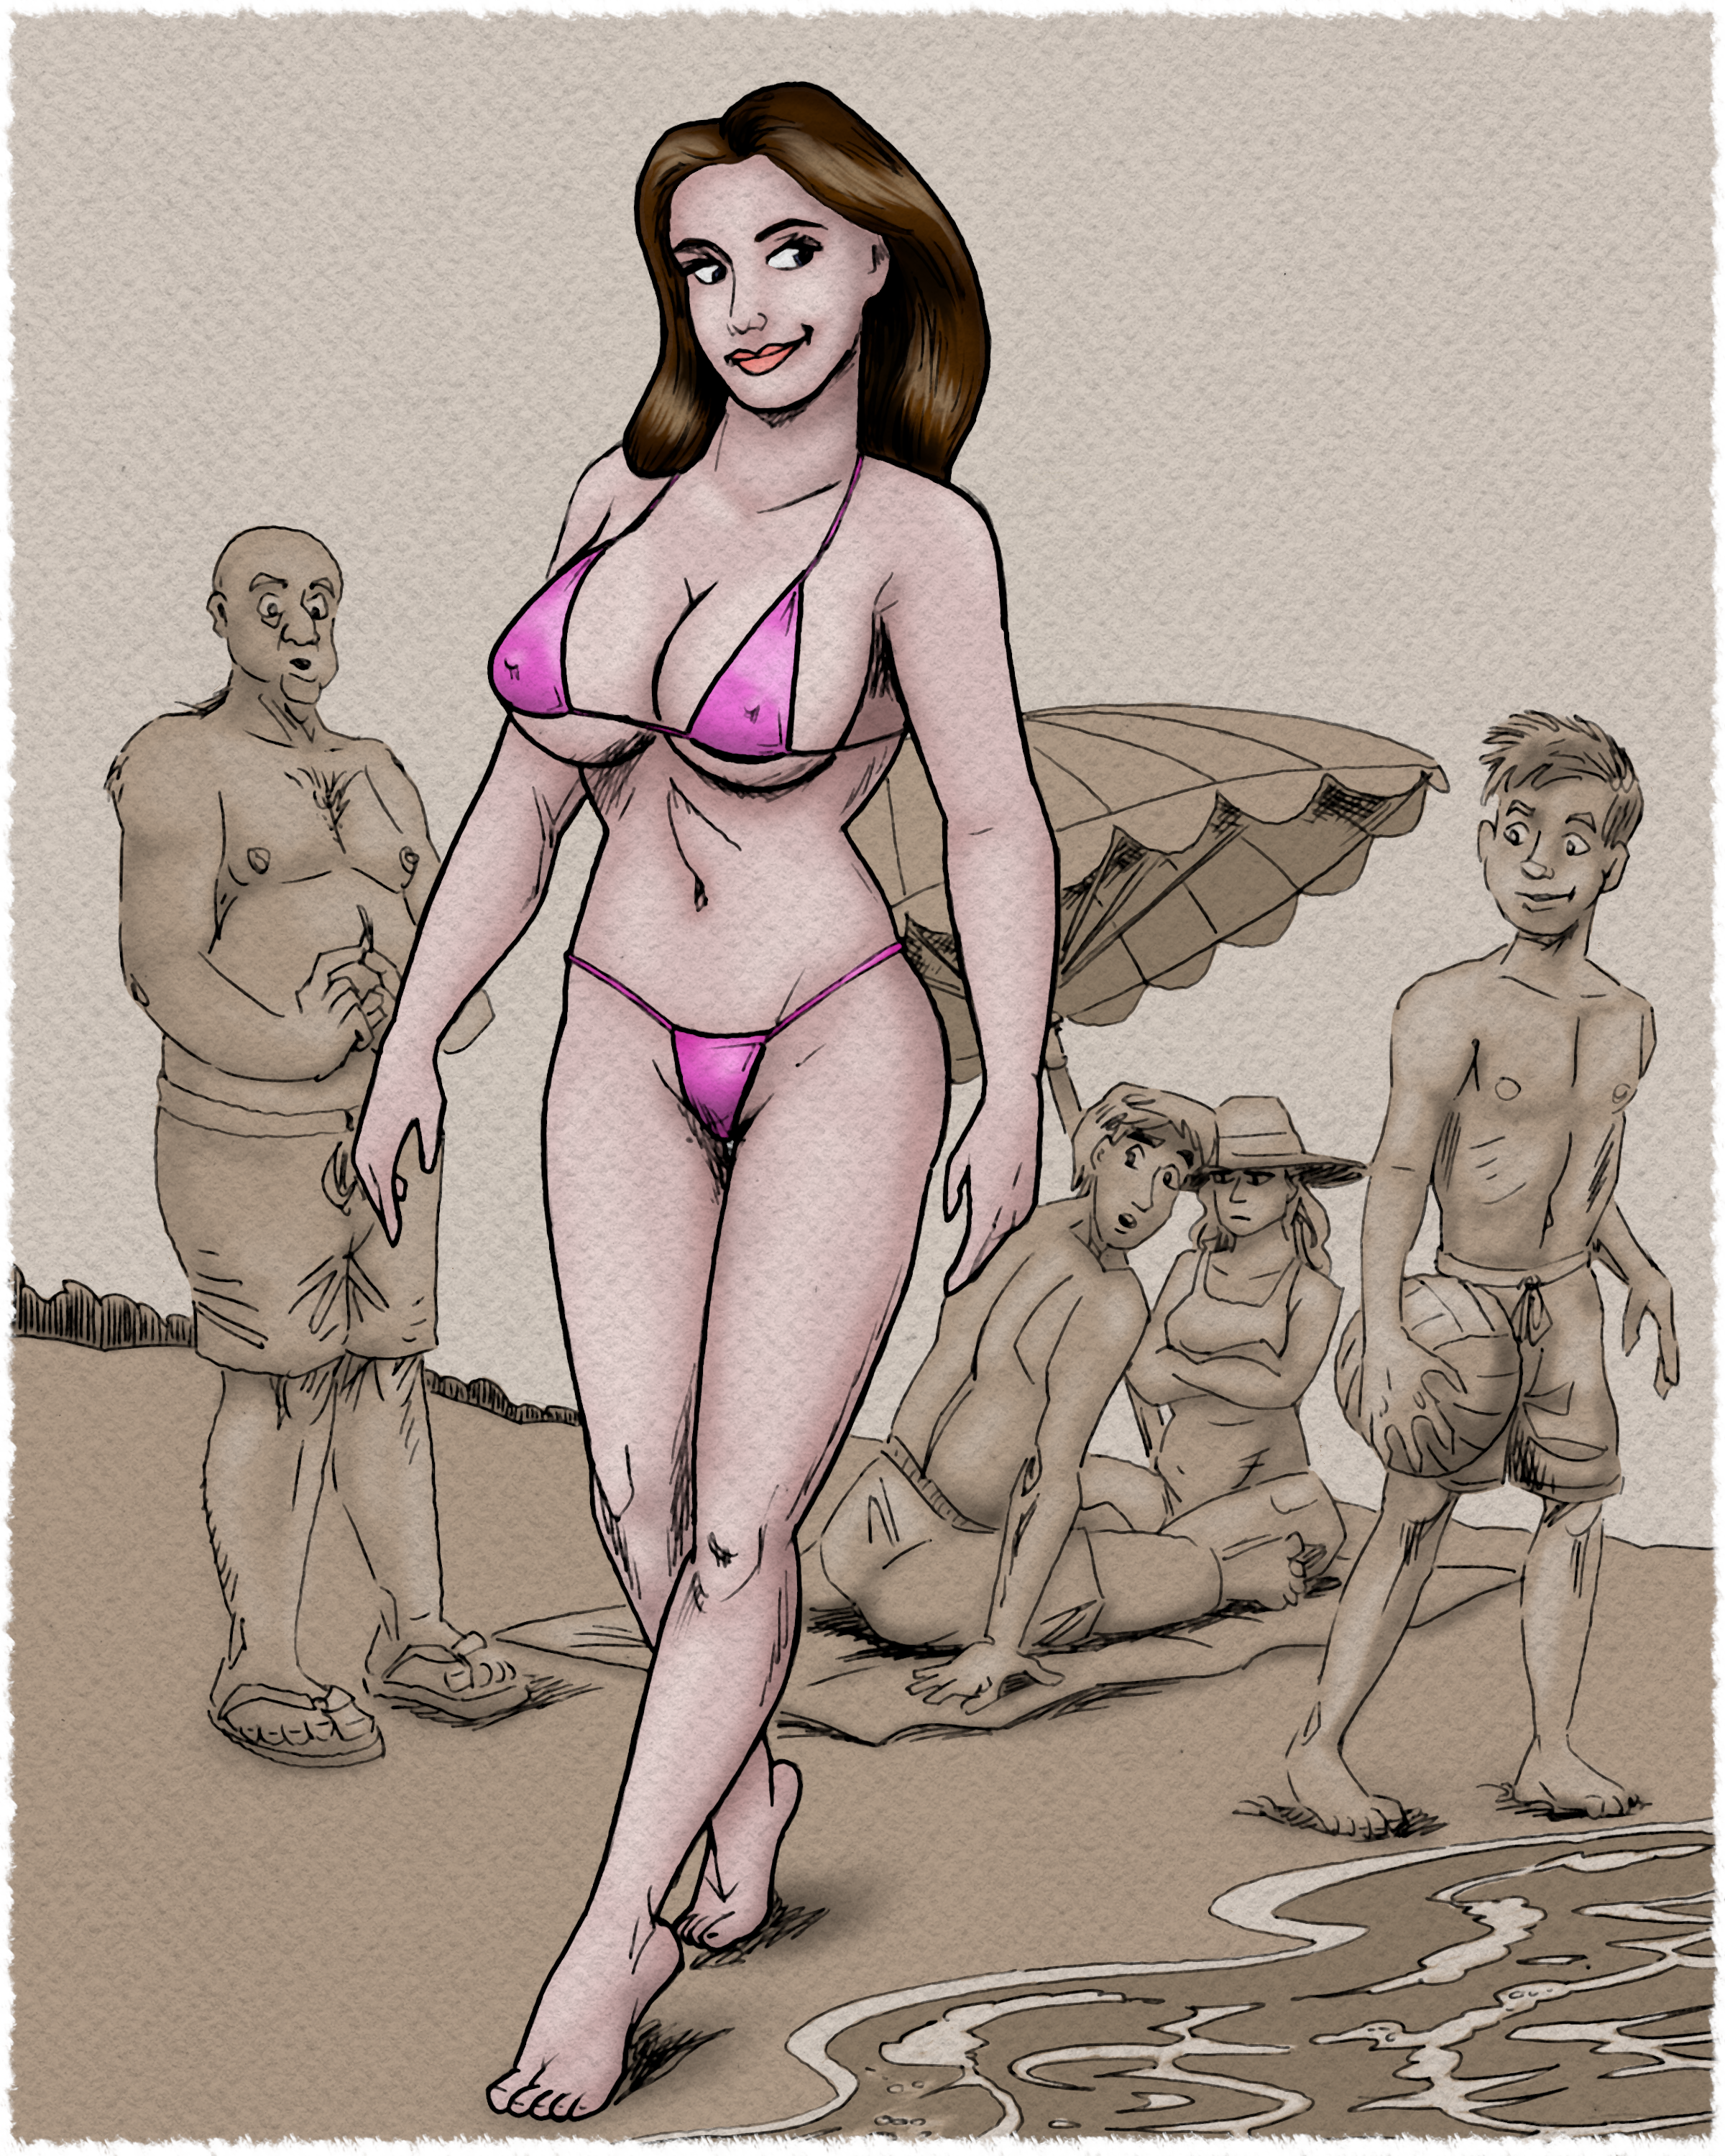 Bryony enjoys showing off in her teeny-tiny bikini.